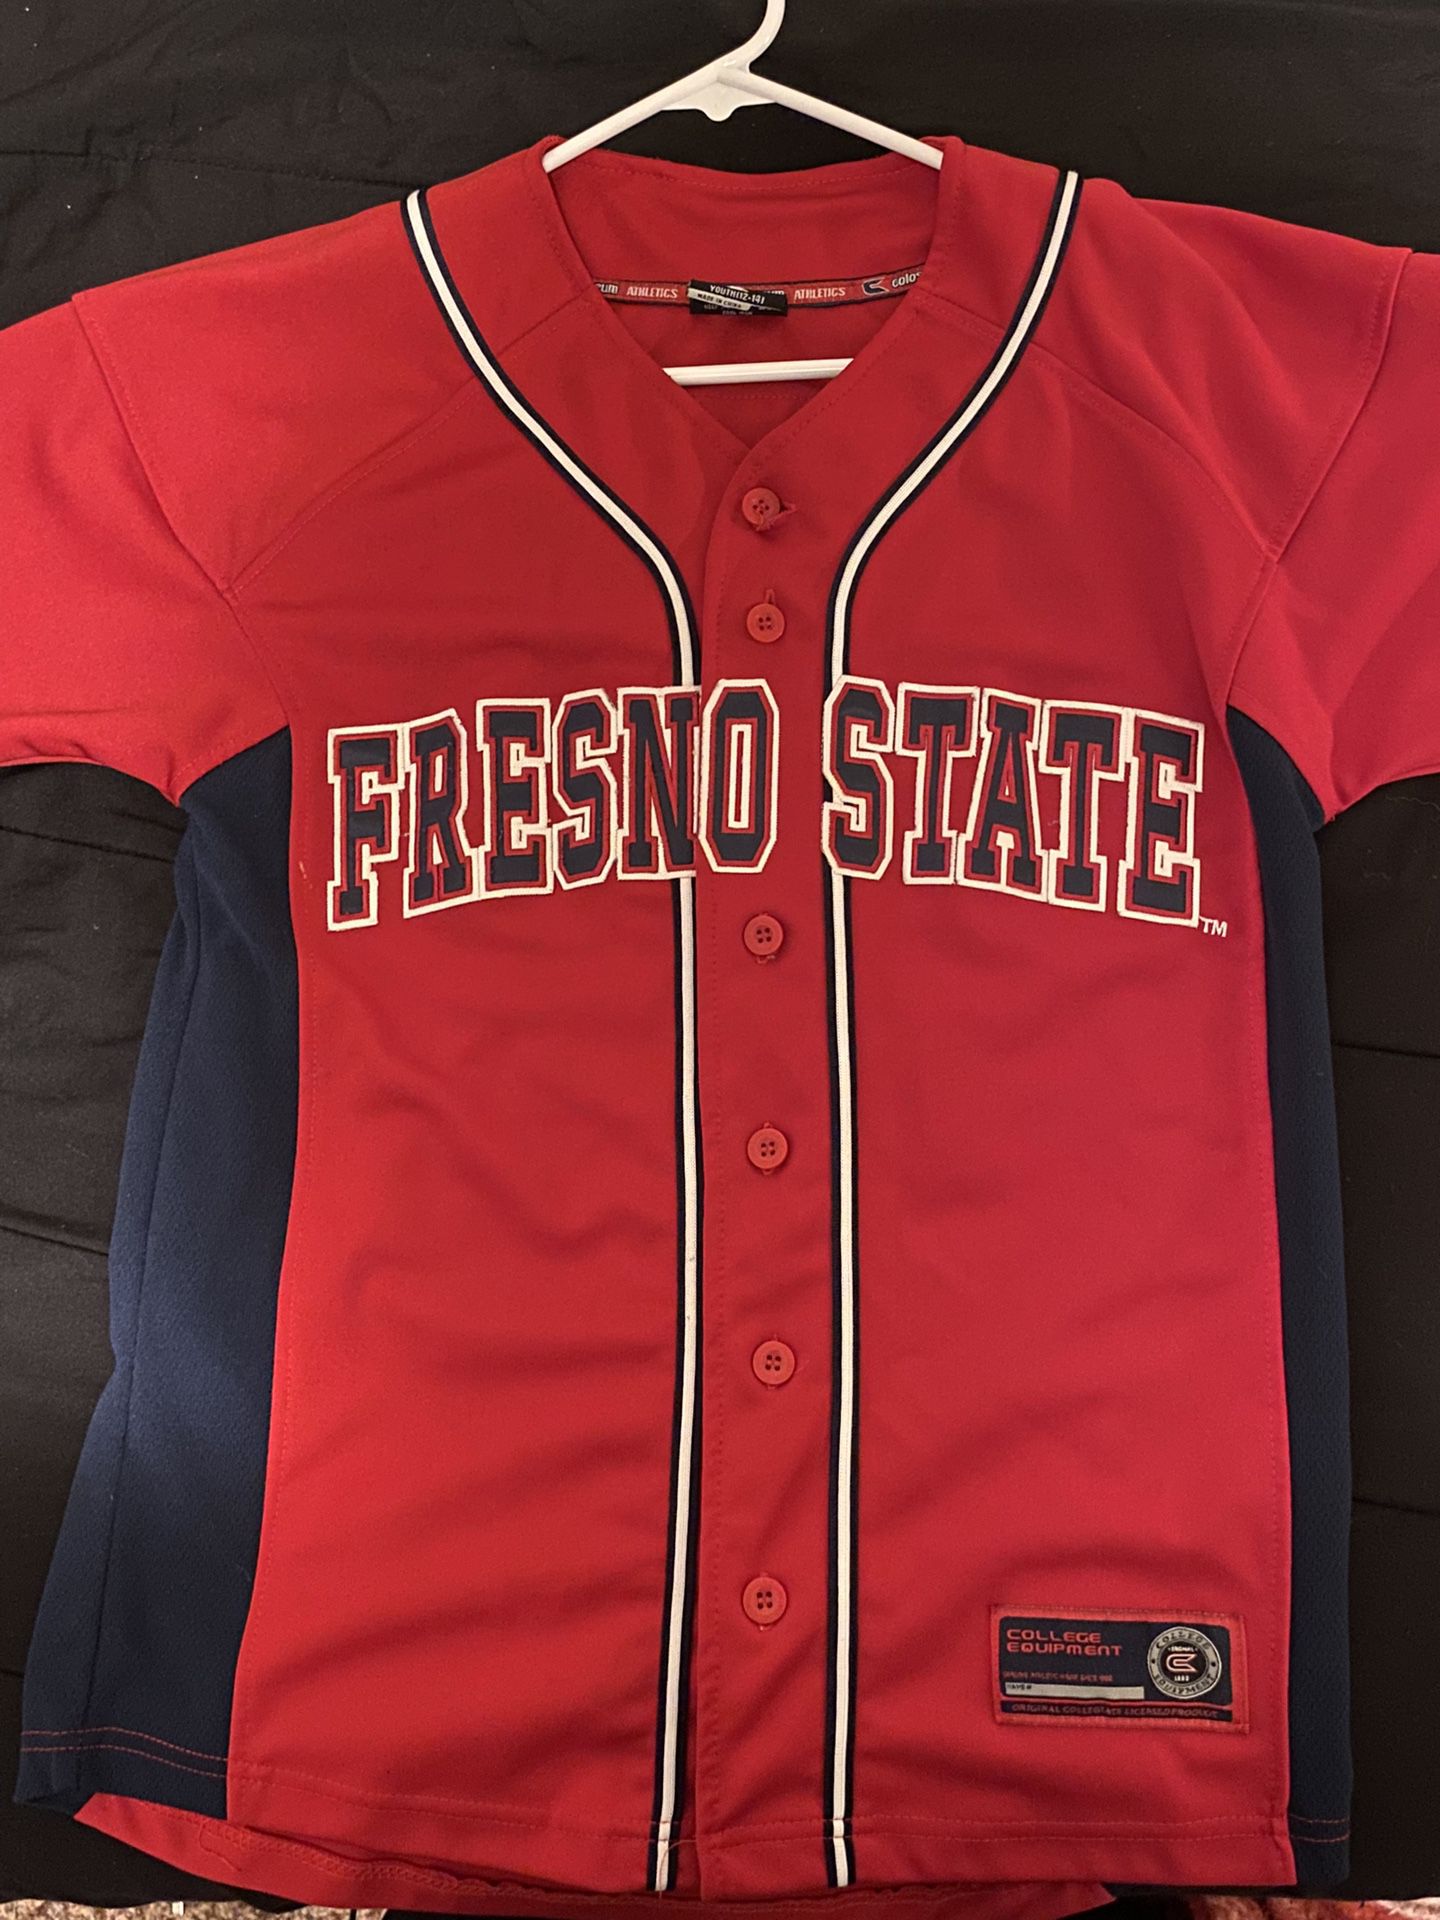 Fresno state baseball jersey size small (pick up only)